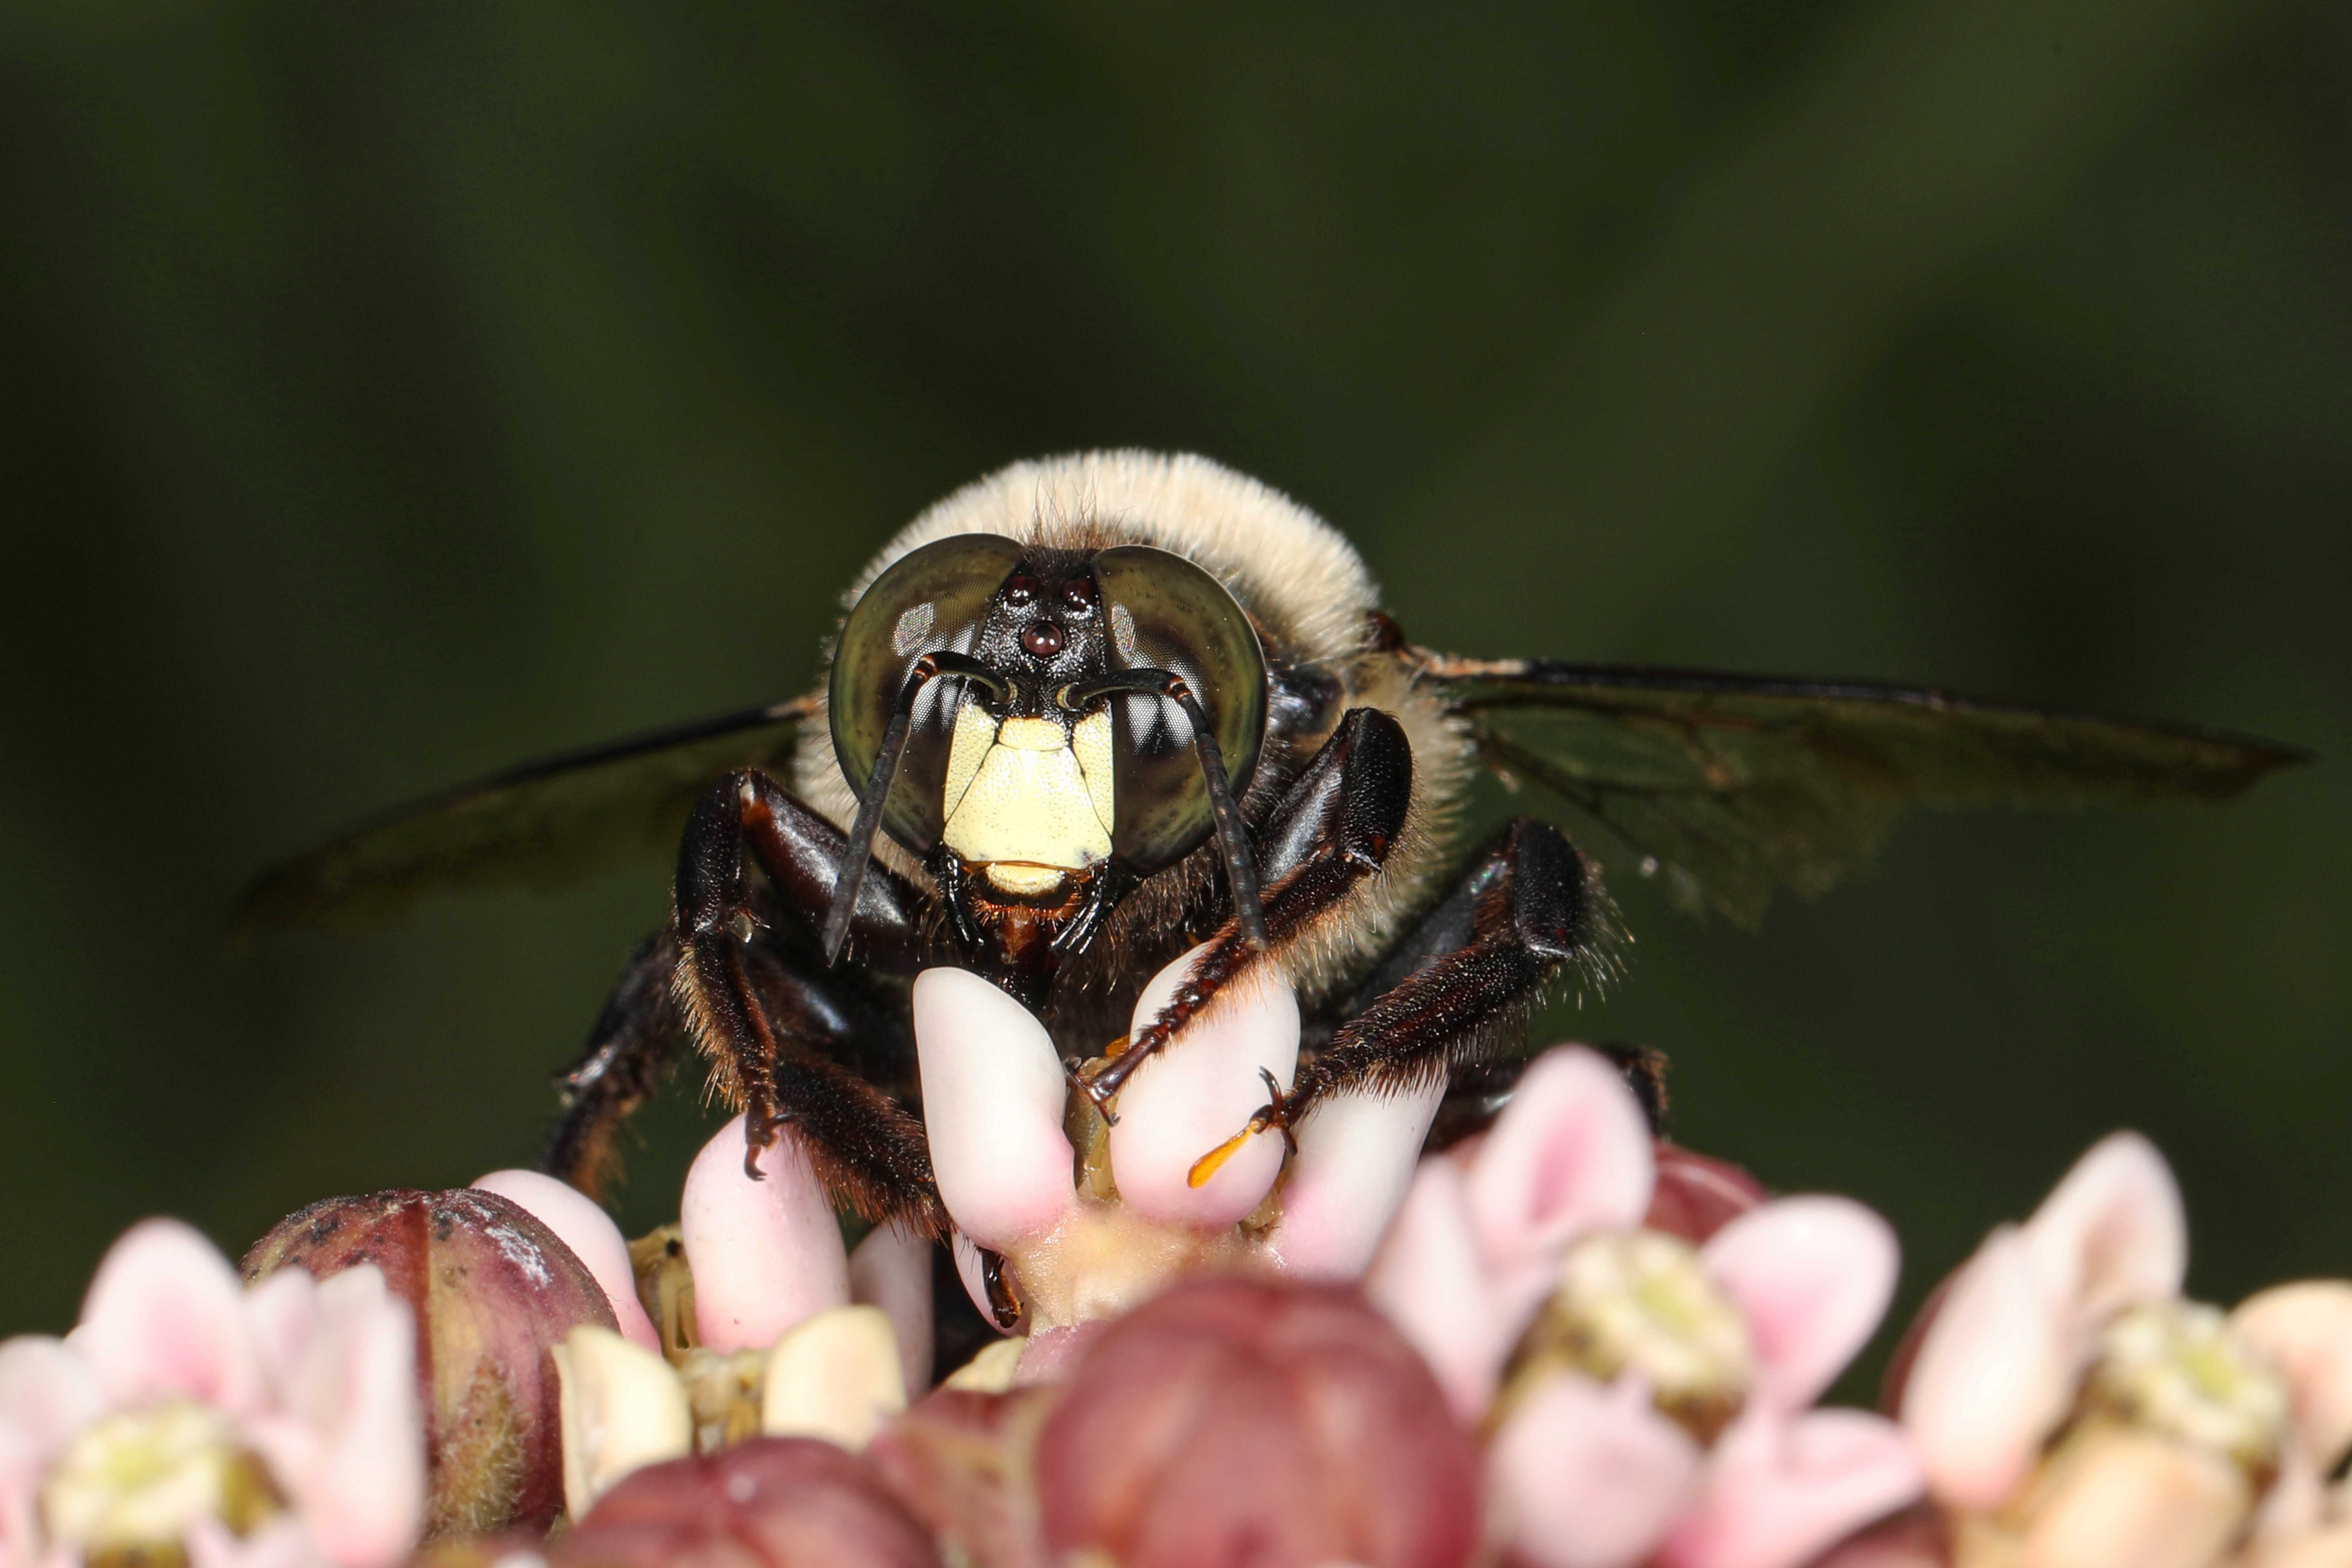 Eastern Carpenter Bee on a flower